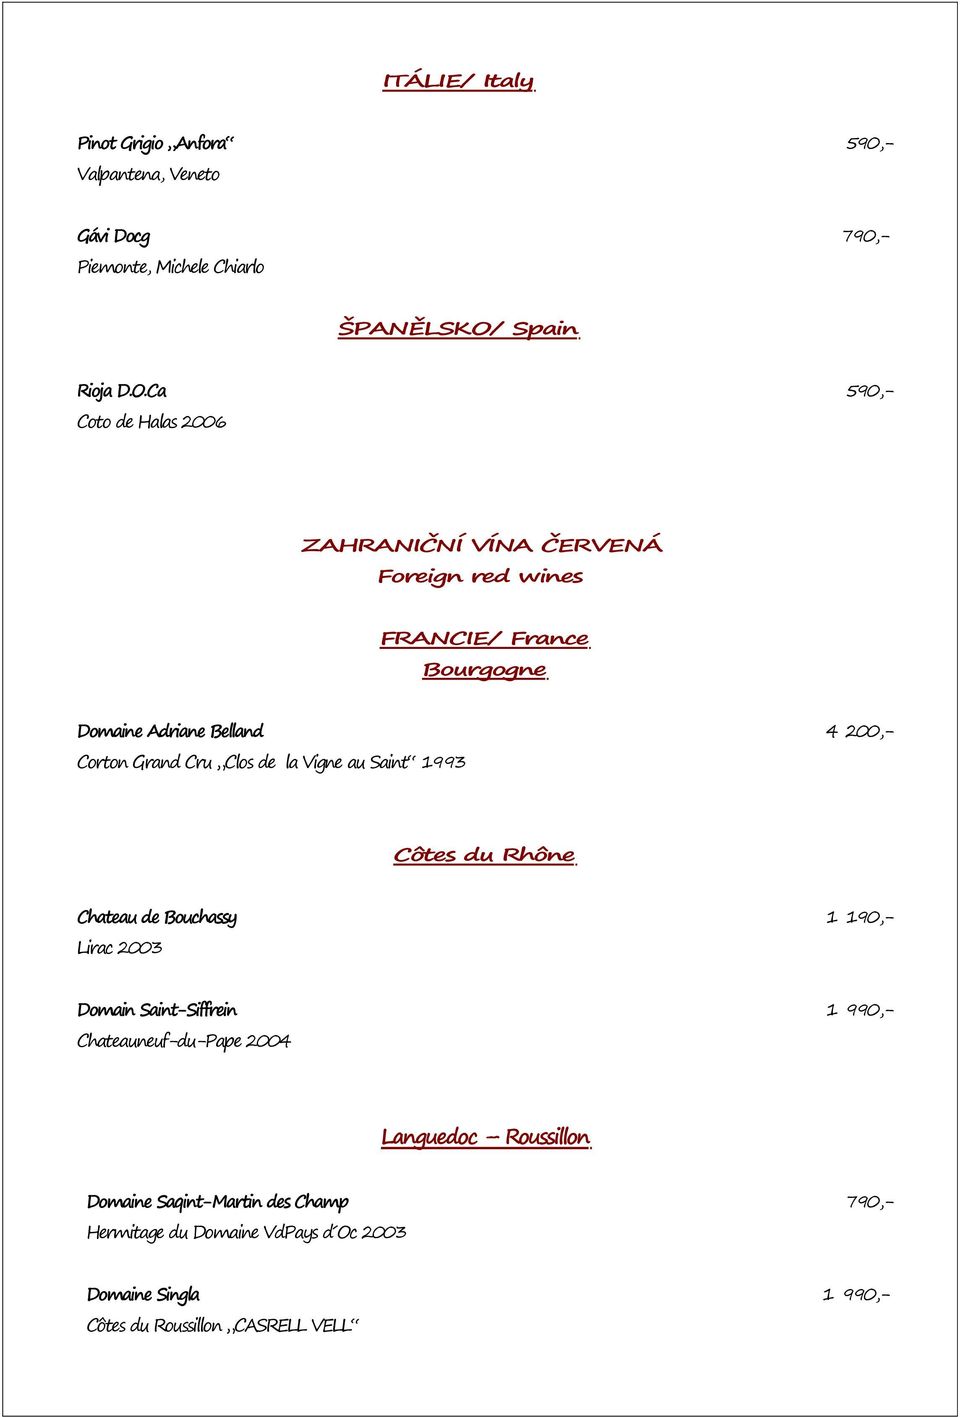 Ca 590,- Coto de Halas 2006 ZAHRANIČNÍ VÍNA ČERVENÁ Foreign red wines FRANCIE/ France Bourgogne Domaine Adriane Belland 4 200,- Corton Grand